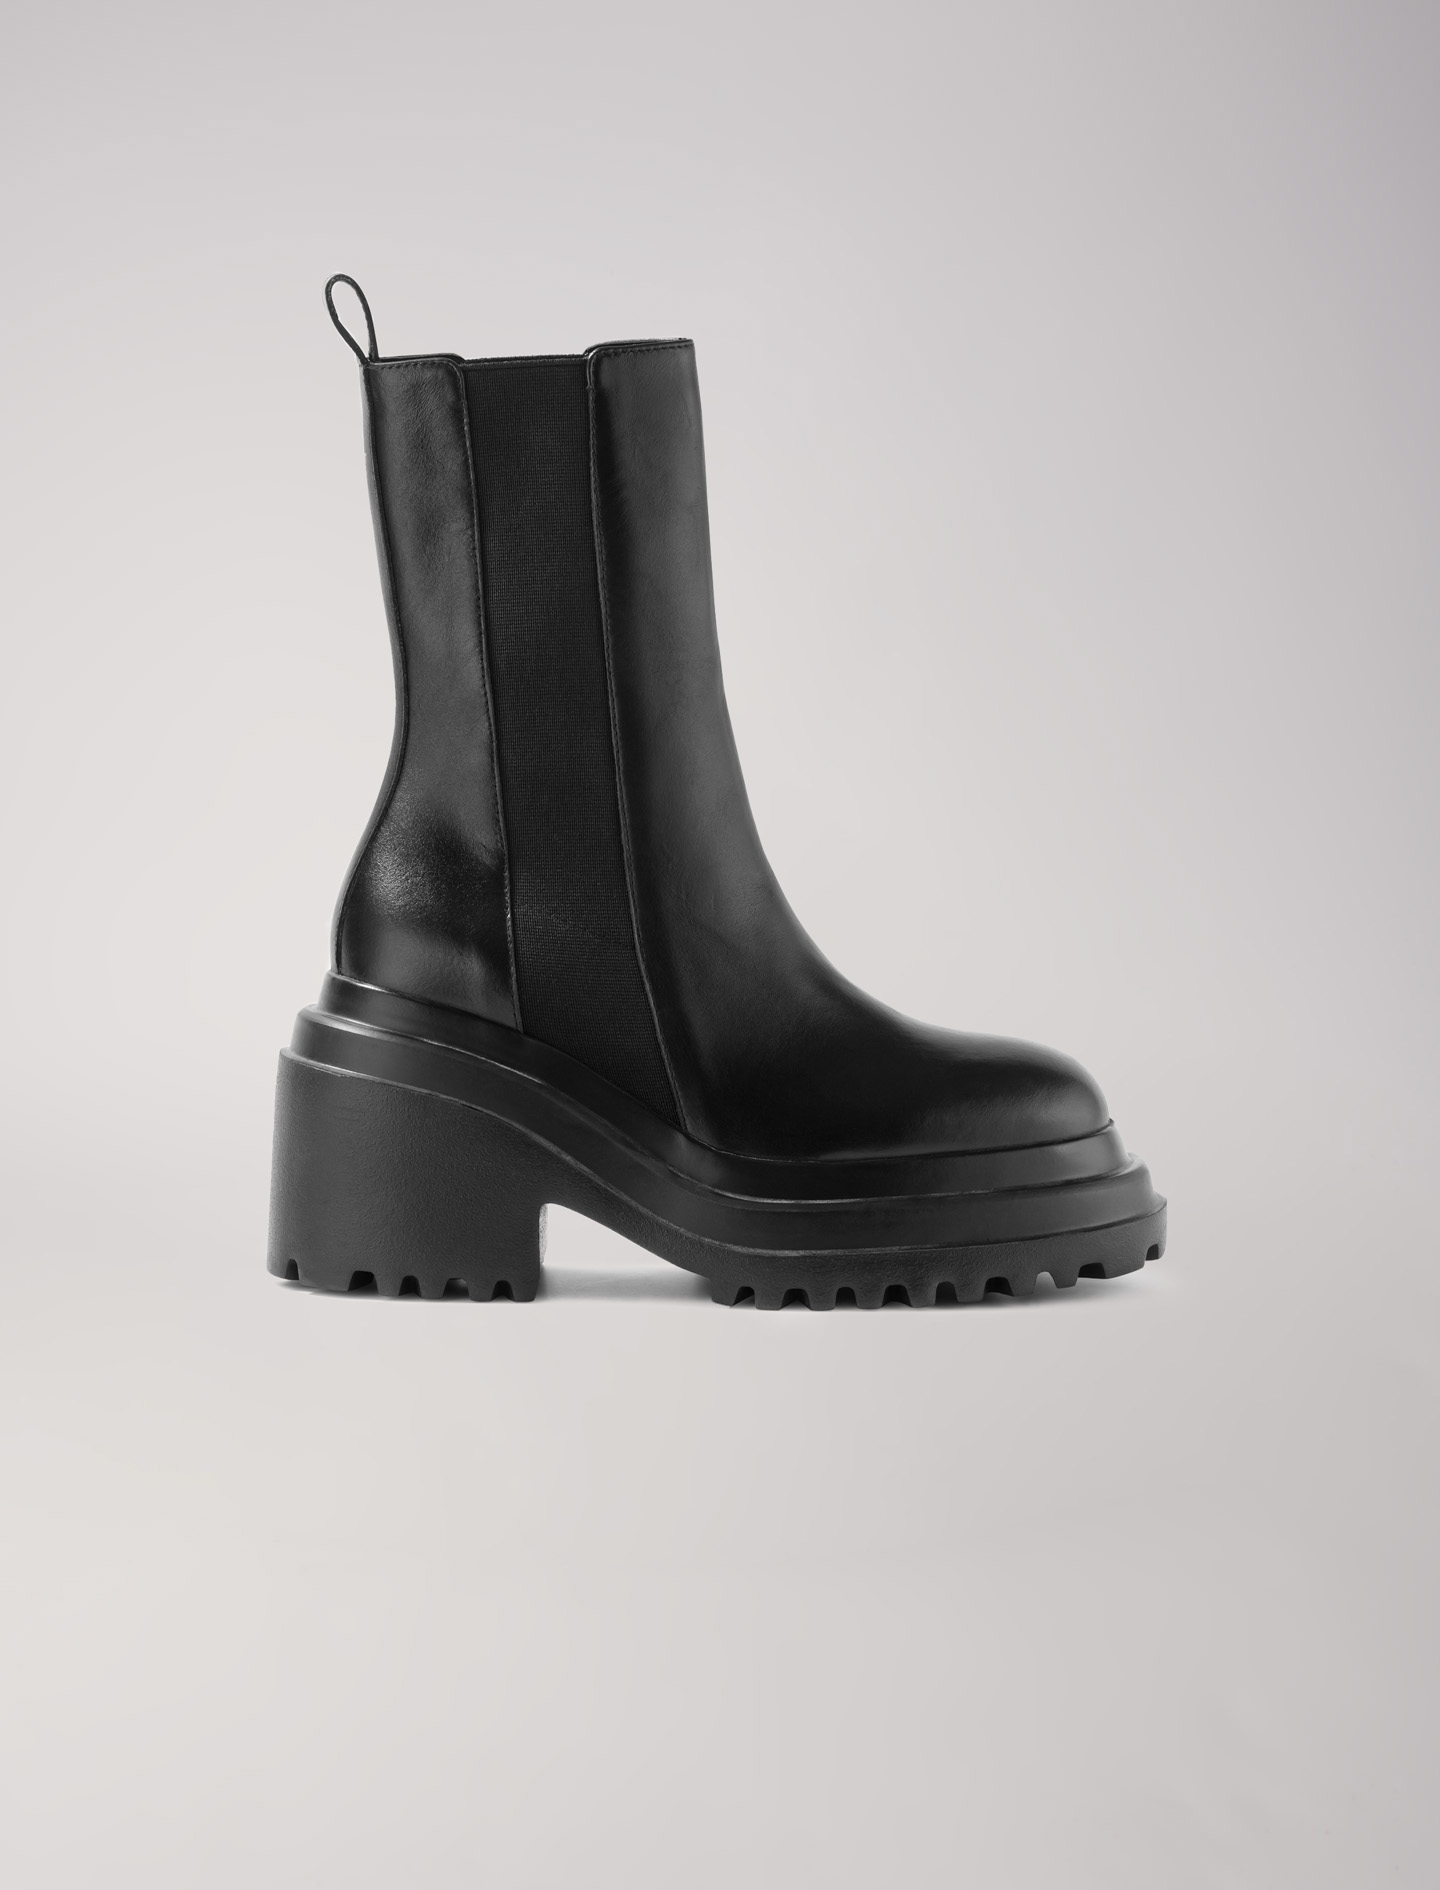 Maje Woman's Ethylene vinyl acetate Upper: Leather ankle boots, in color Black / Black